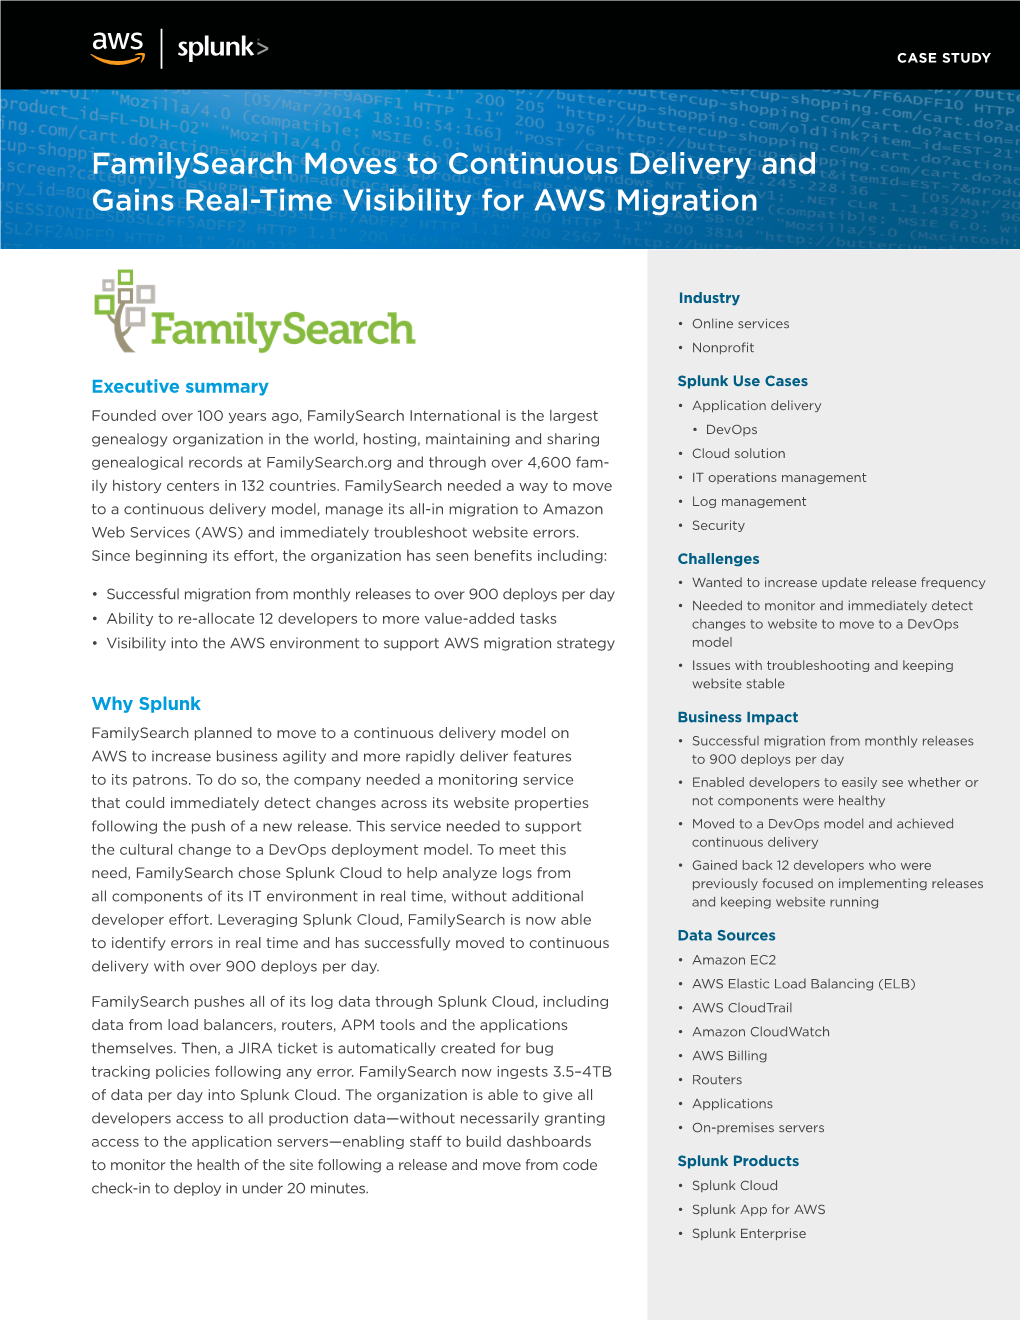 Splunk Case Study: Familysearch